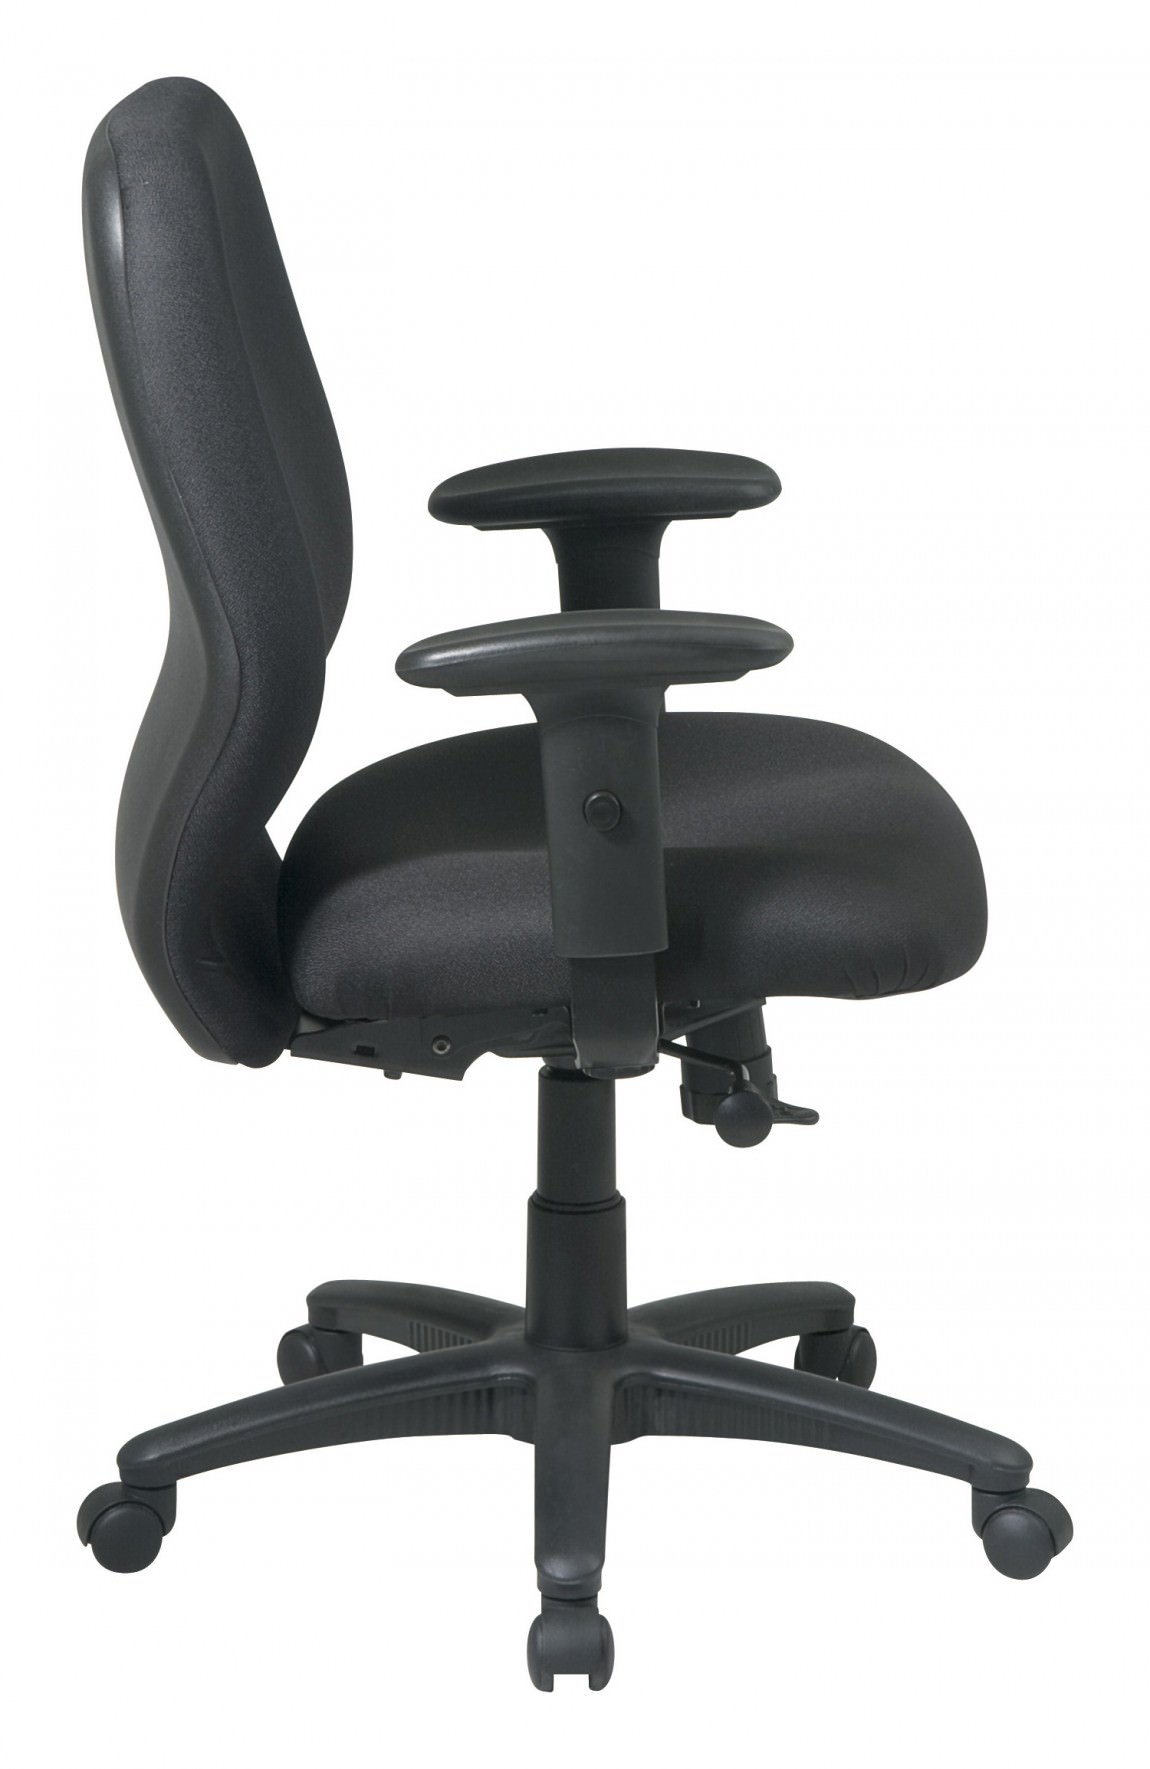 https://madisonliquidators.com/images/p/1150/25975-mid-back-padded-office-chair-2.jpg